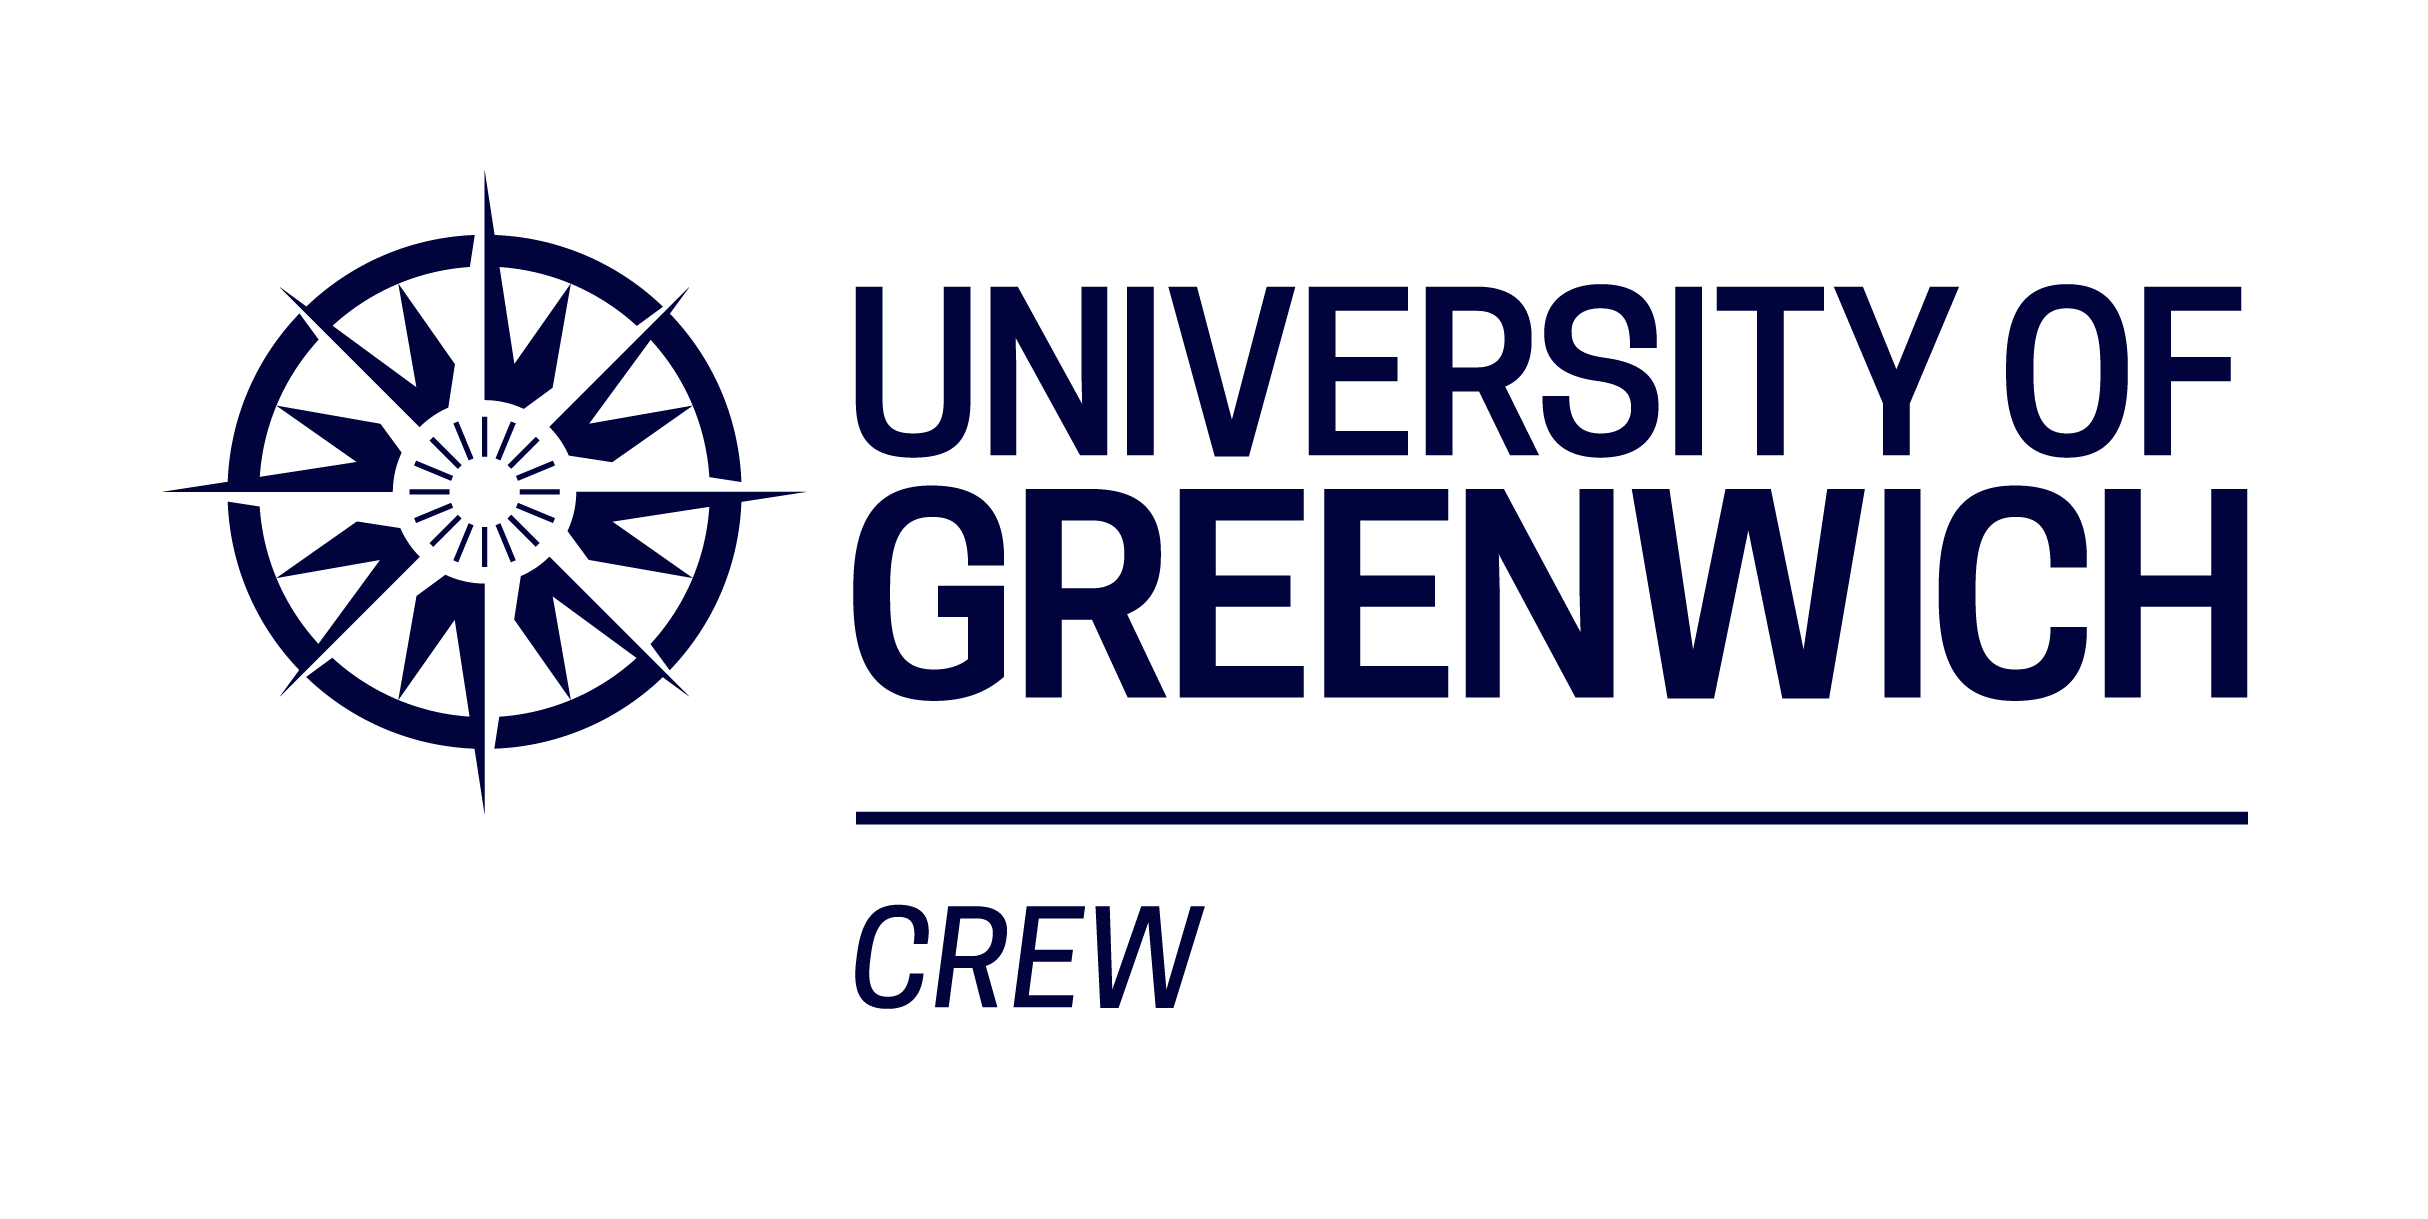 Blue University of Greenwich Crew Logo on white background